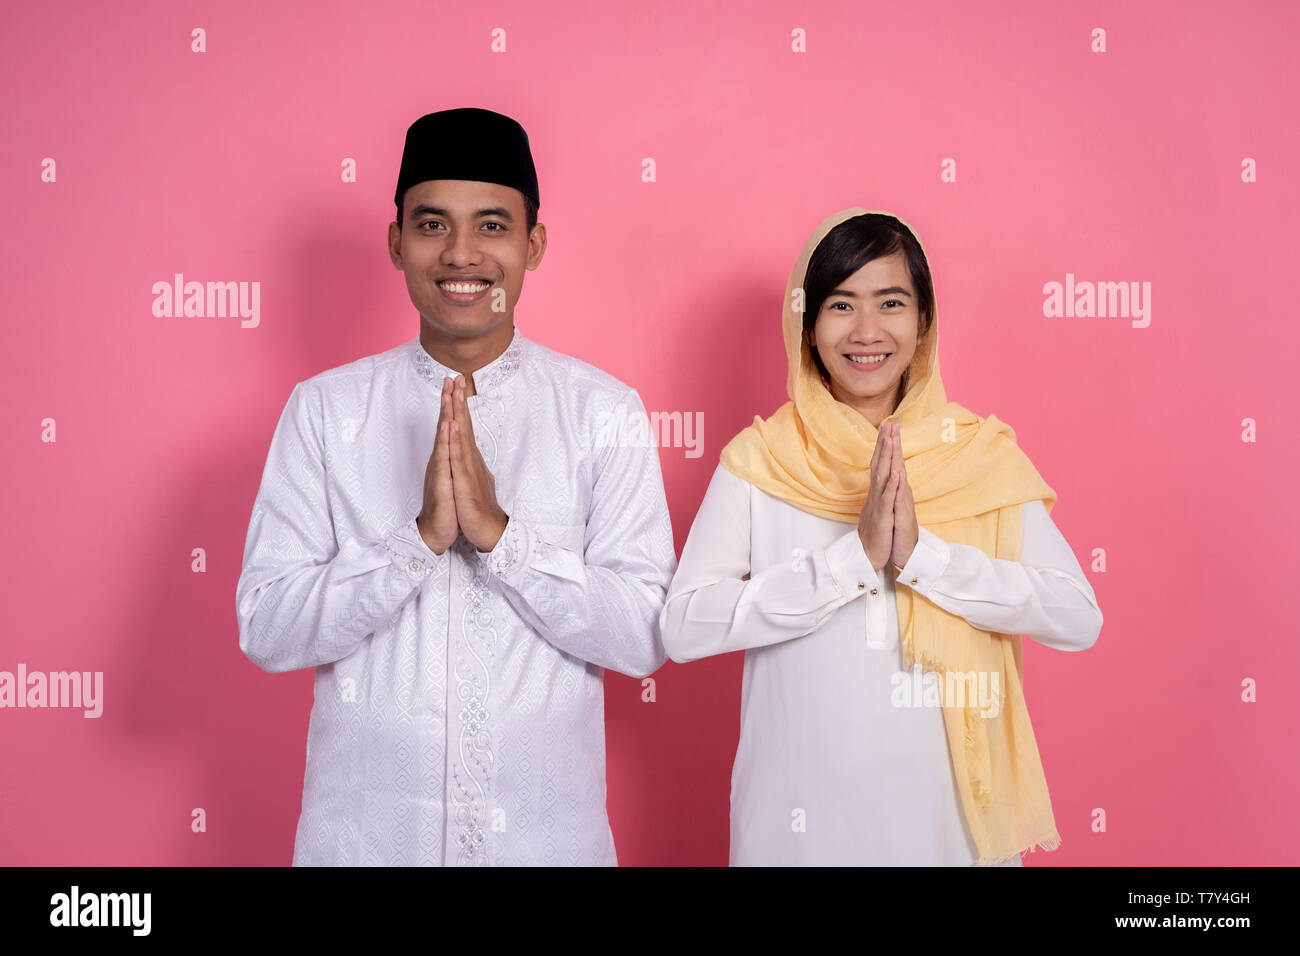 man and woman muslim greeting Stock Photo